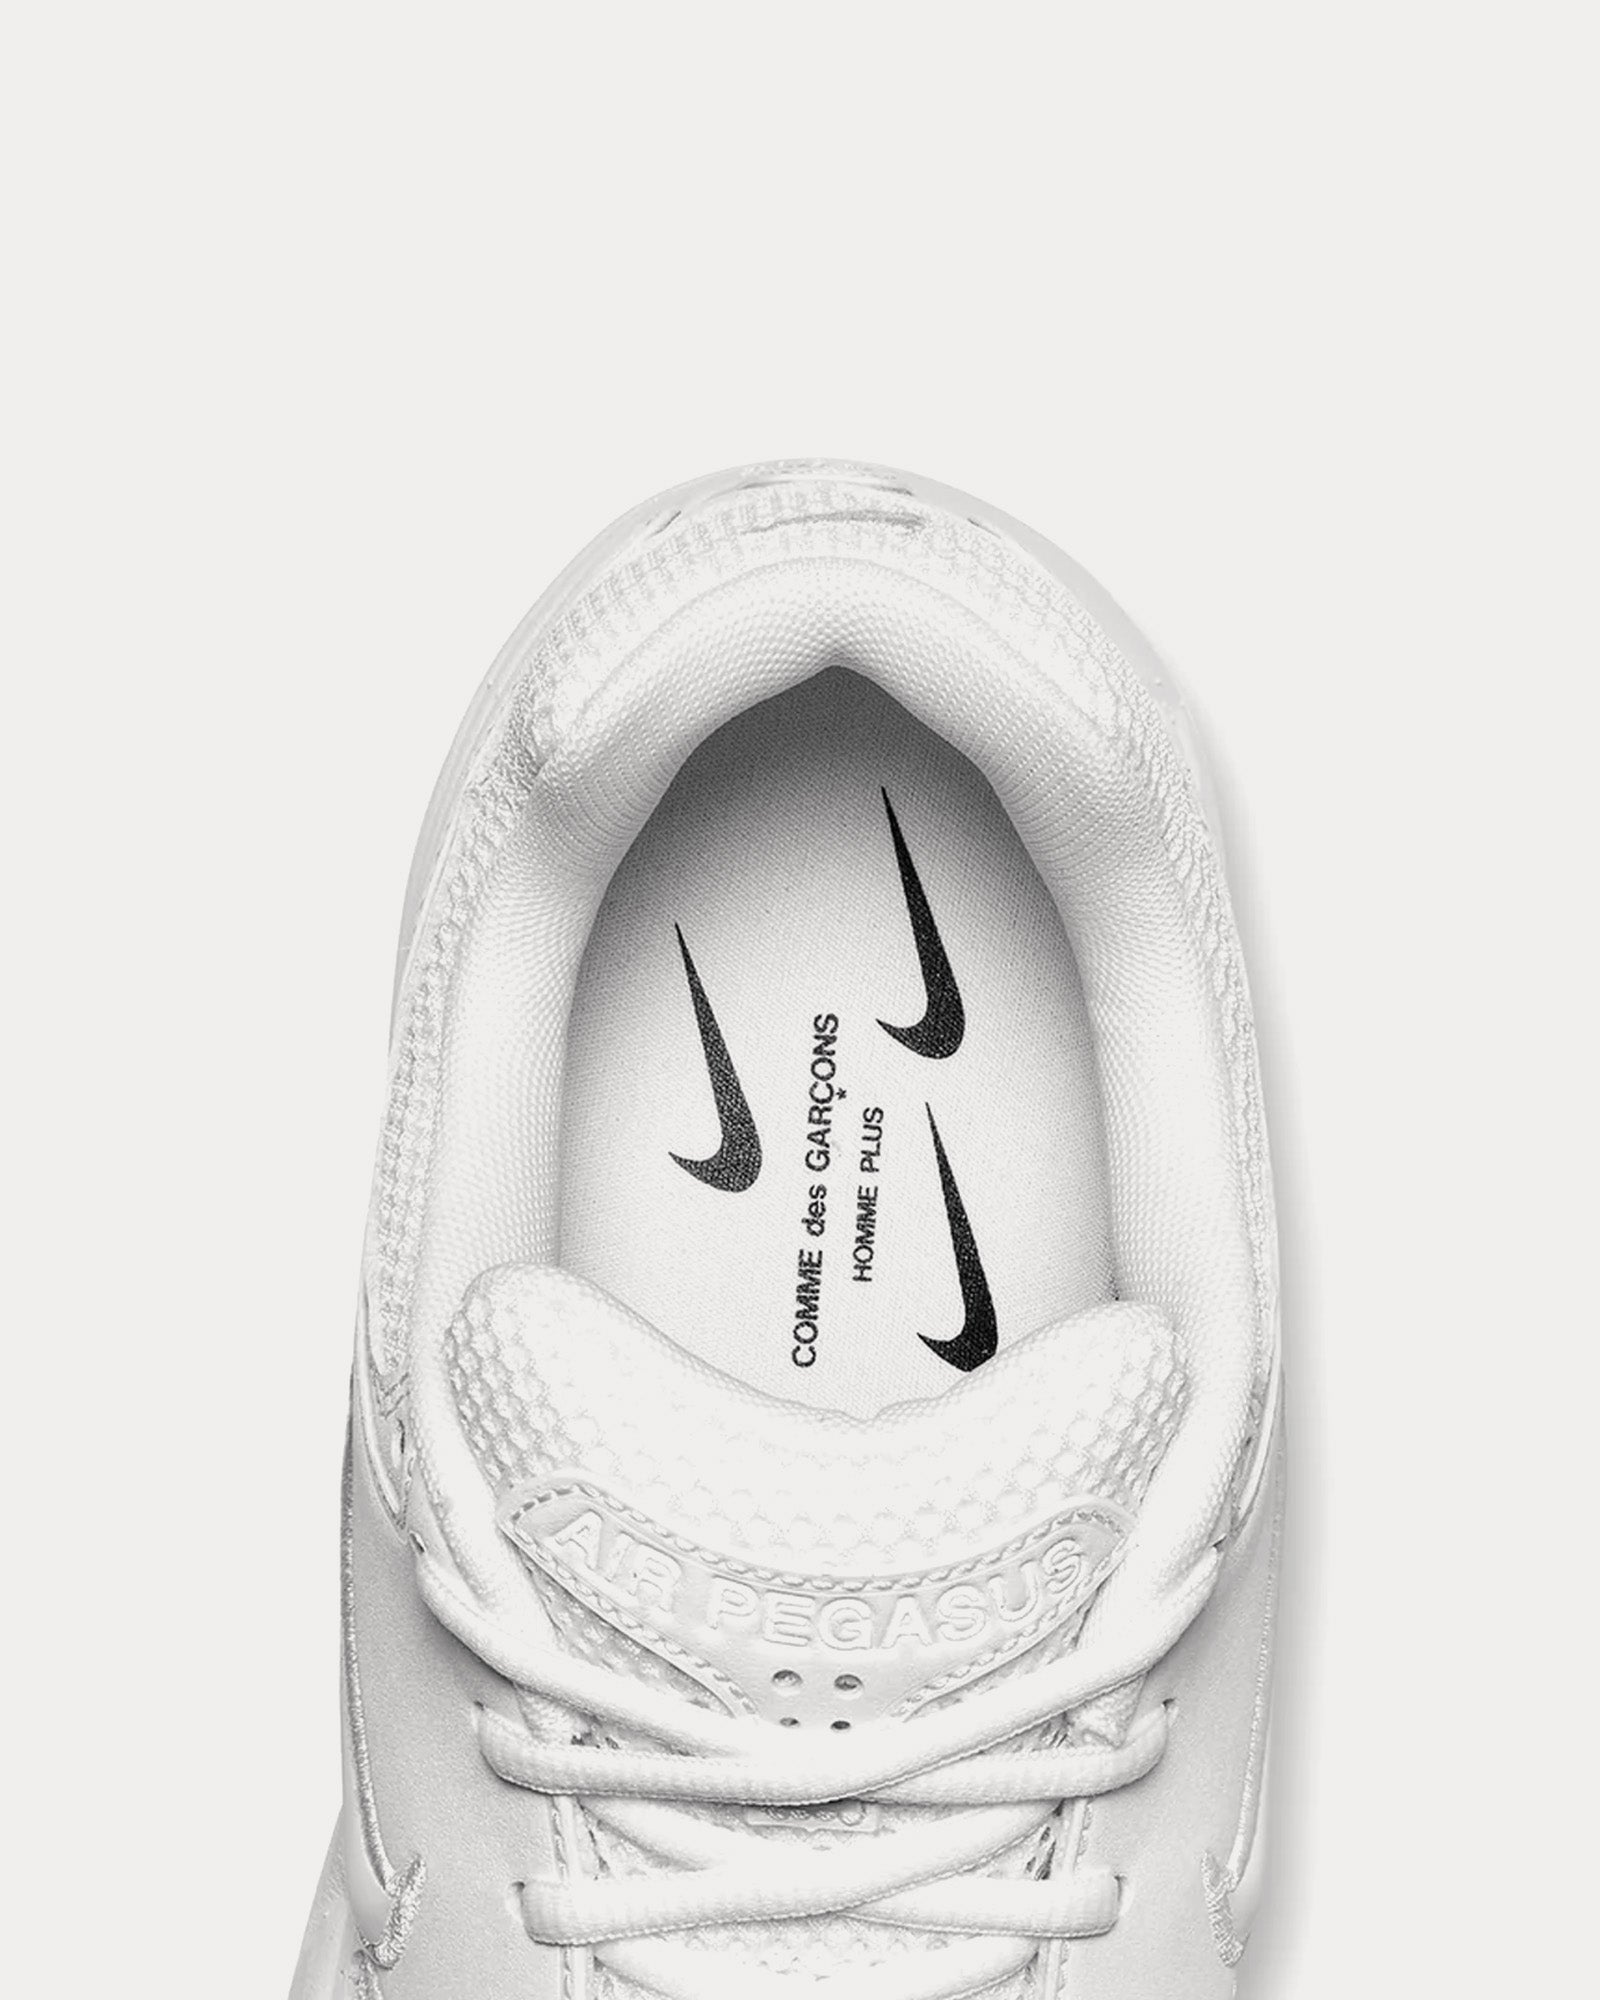 Nike x Comme des Garçons - Air Pegasus 2005 White Low Top Sneakers